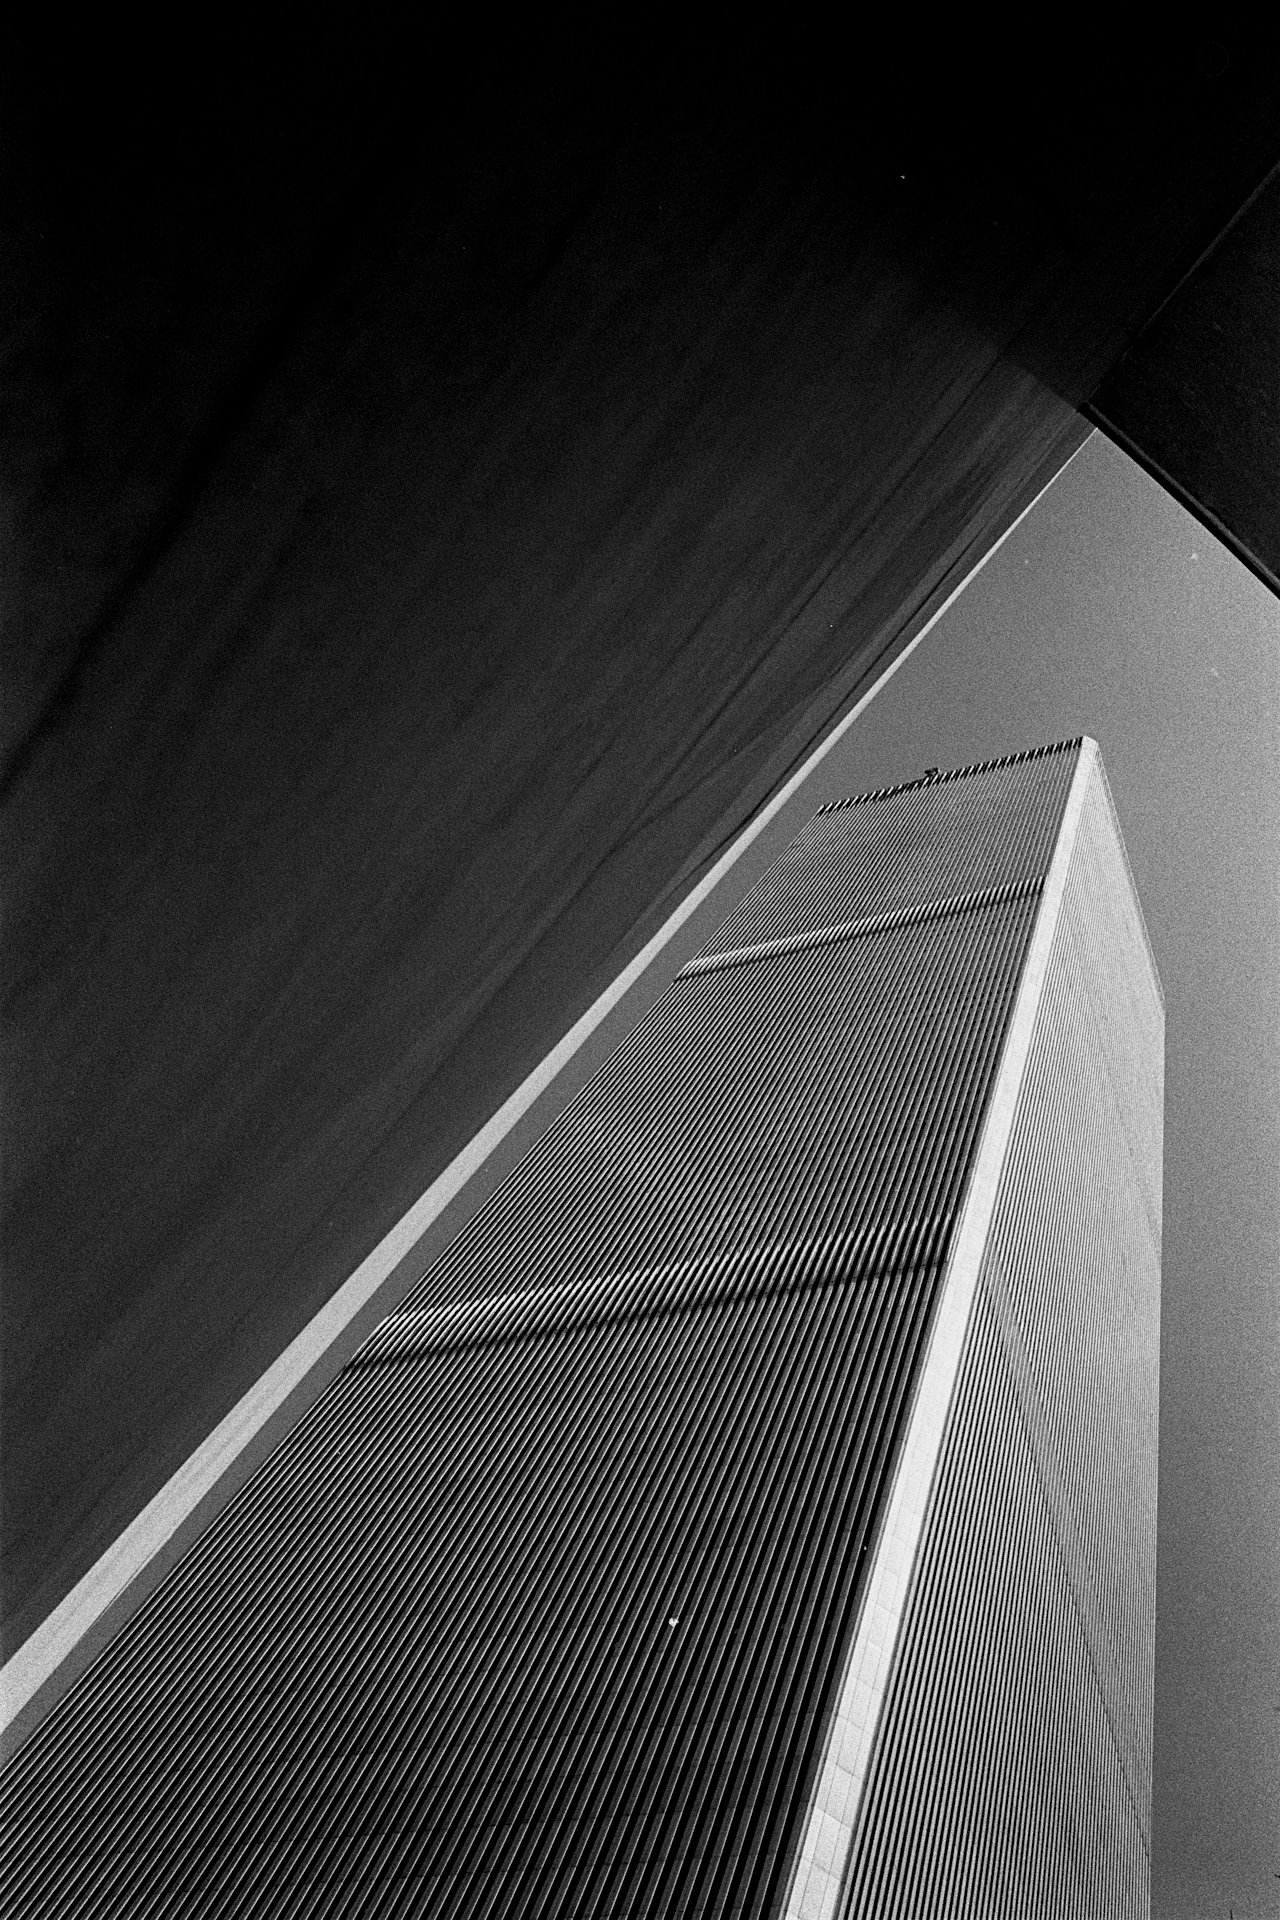 World Trade Center #2, NYC, 1999